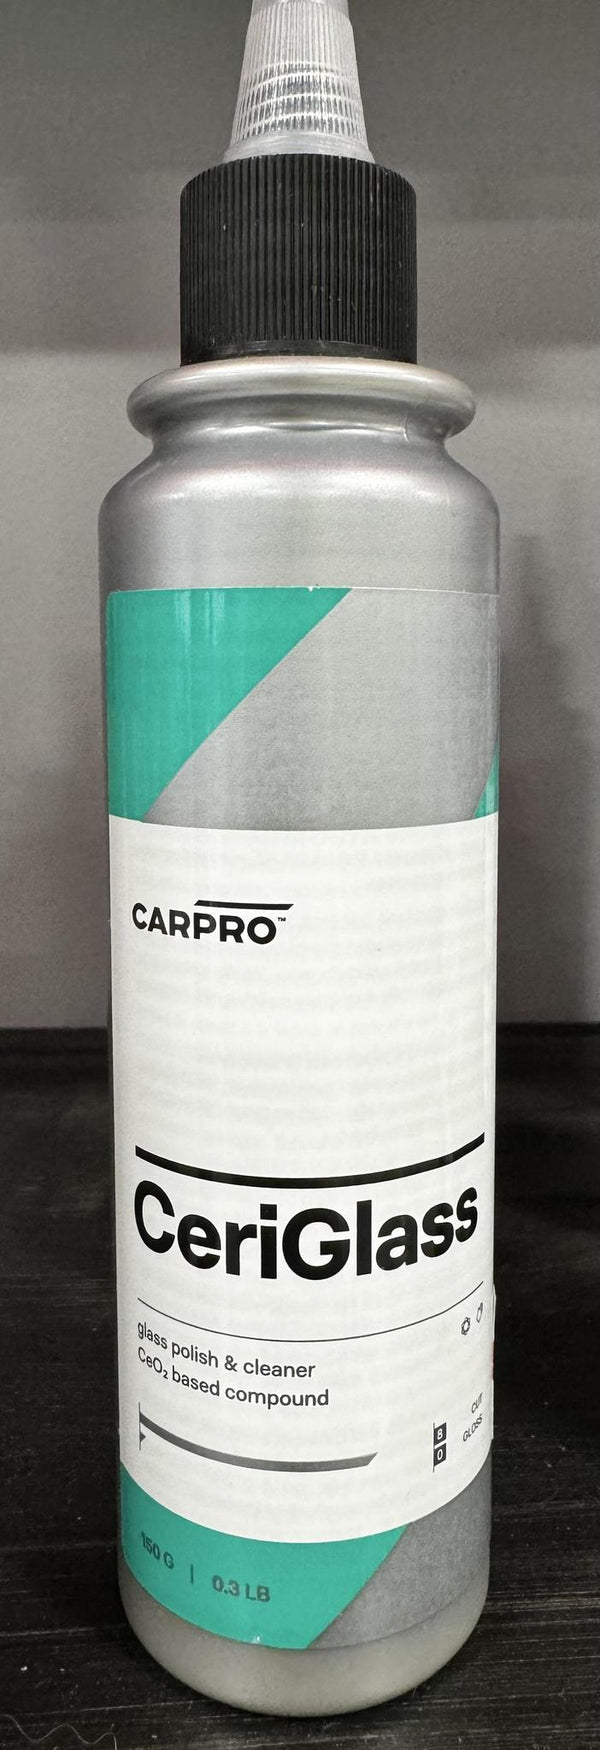 CarPro CeriGlass Glass Polish and Cleaner KIT 5 fl oz (150 ml)